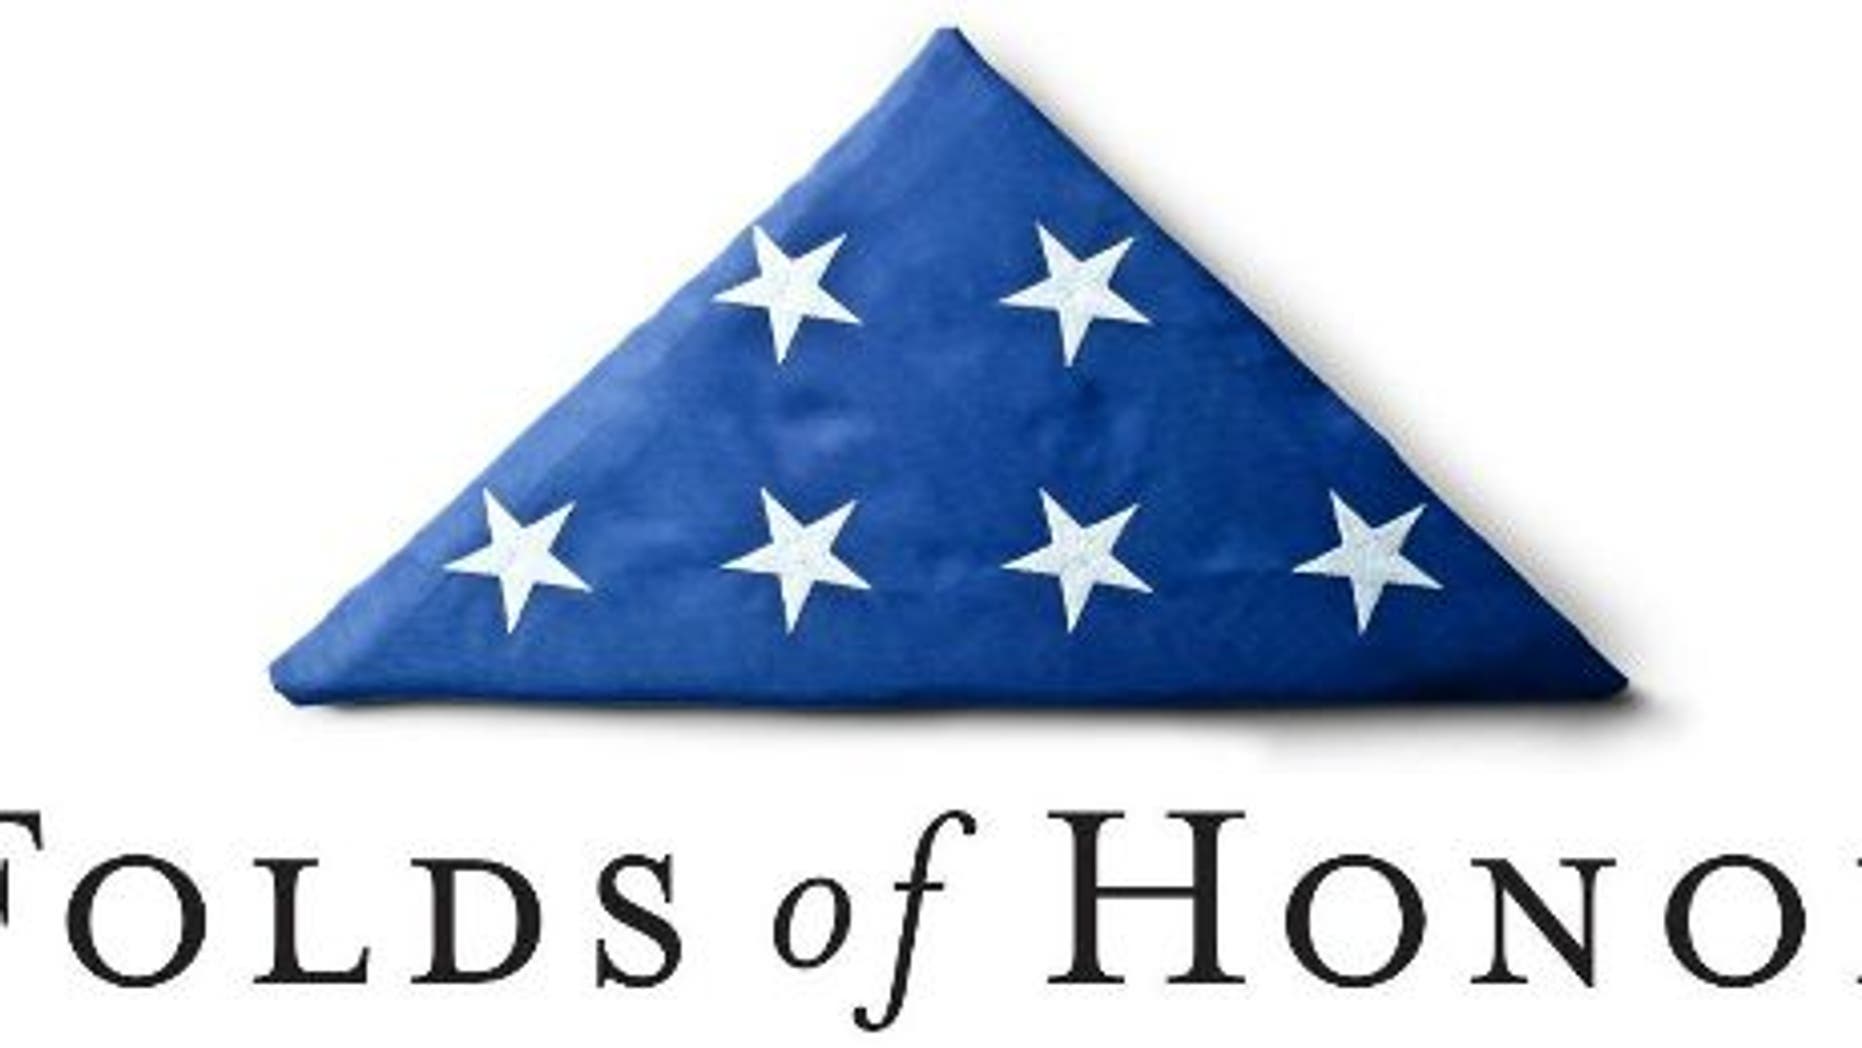 Folds of Honor Fox News